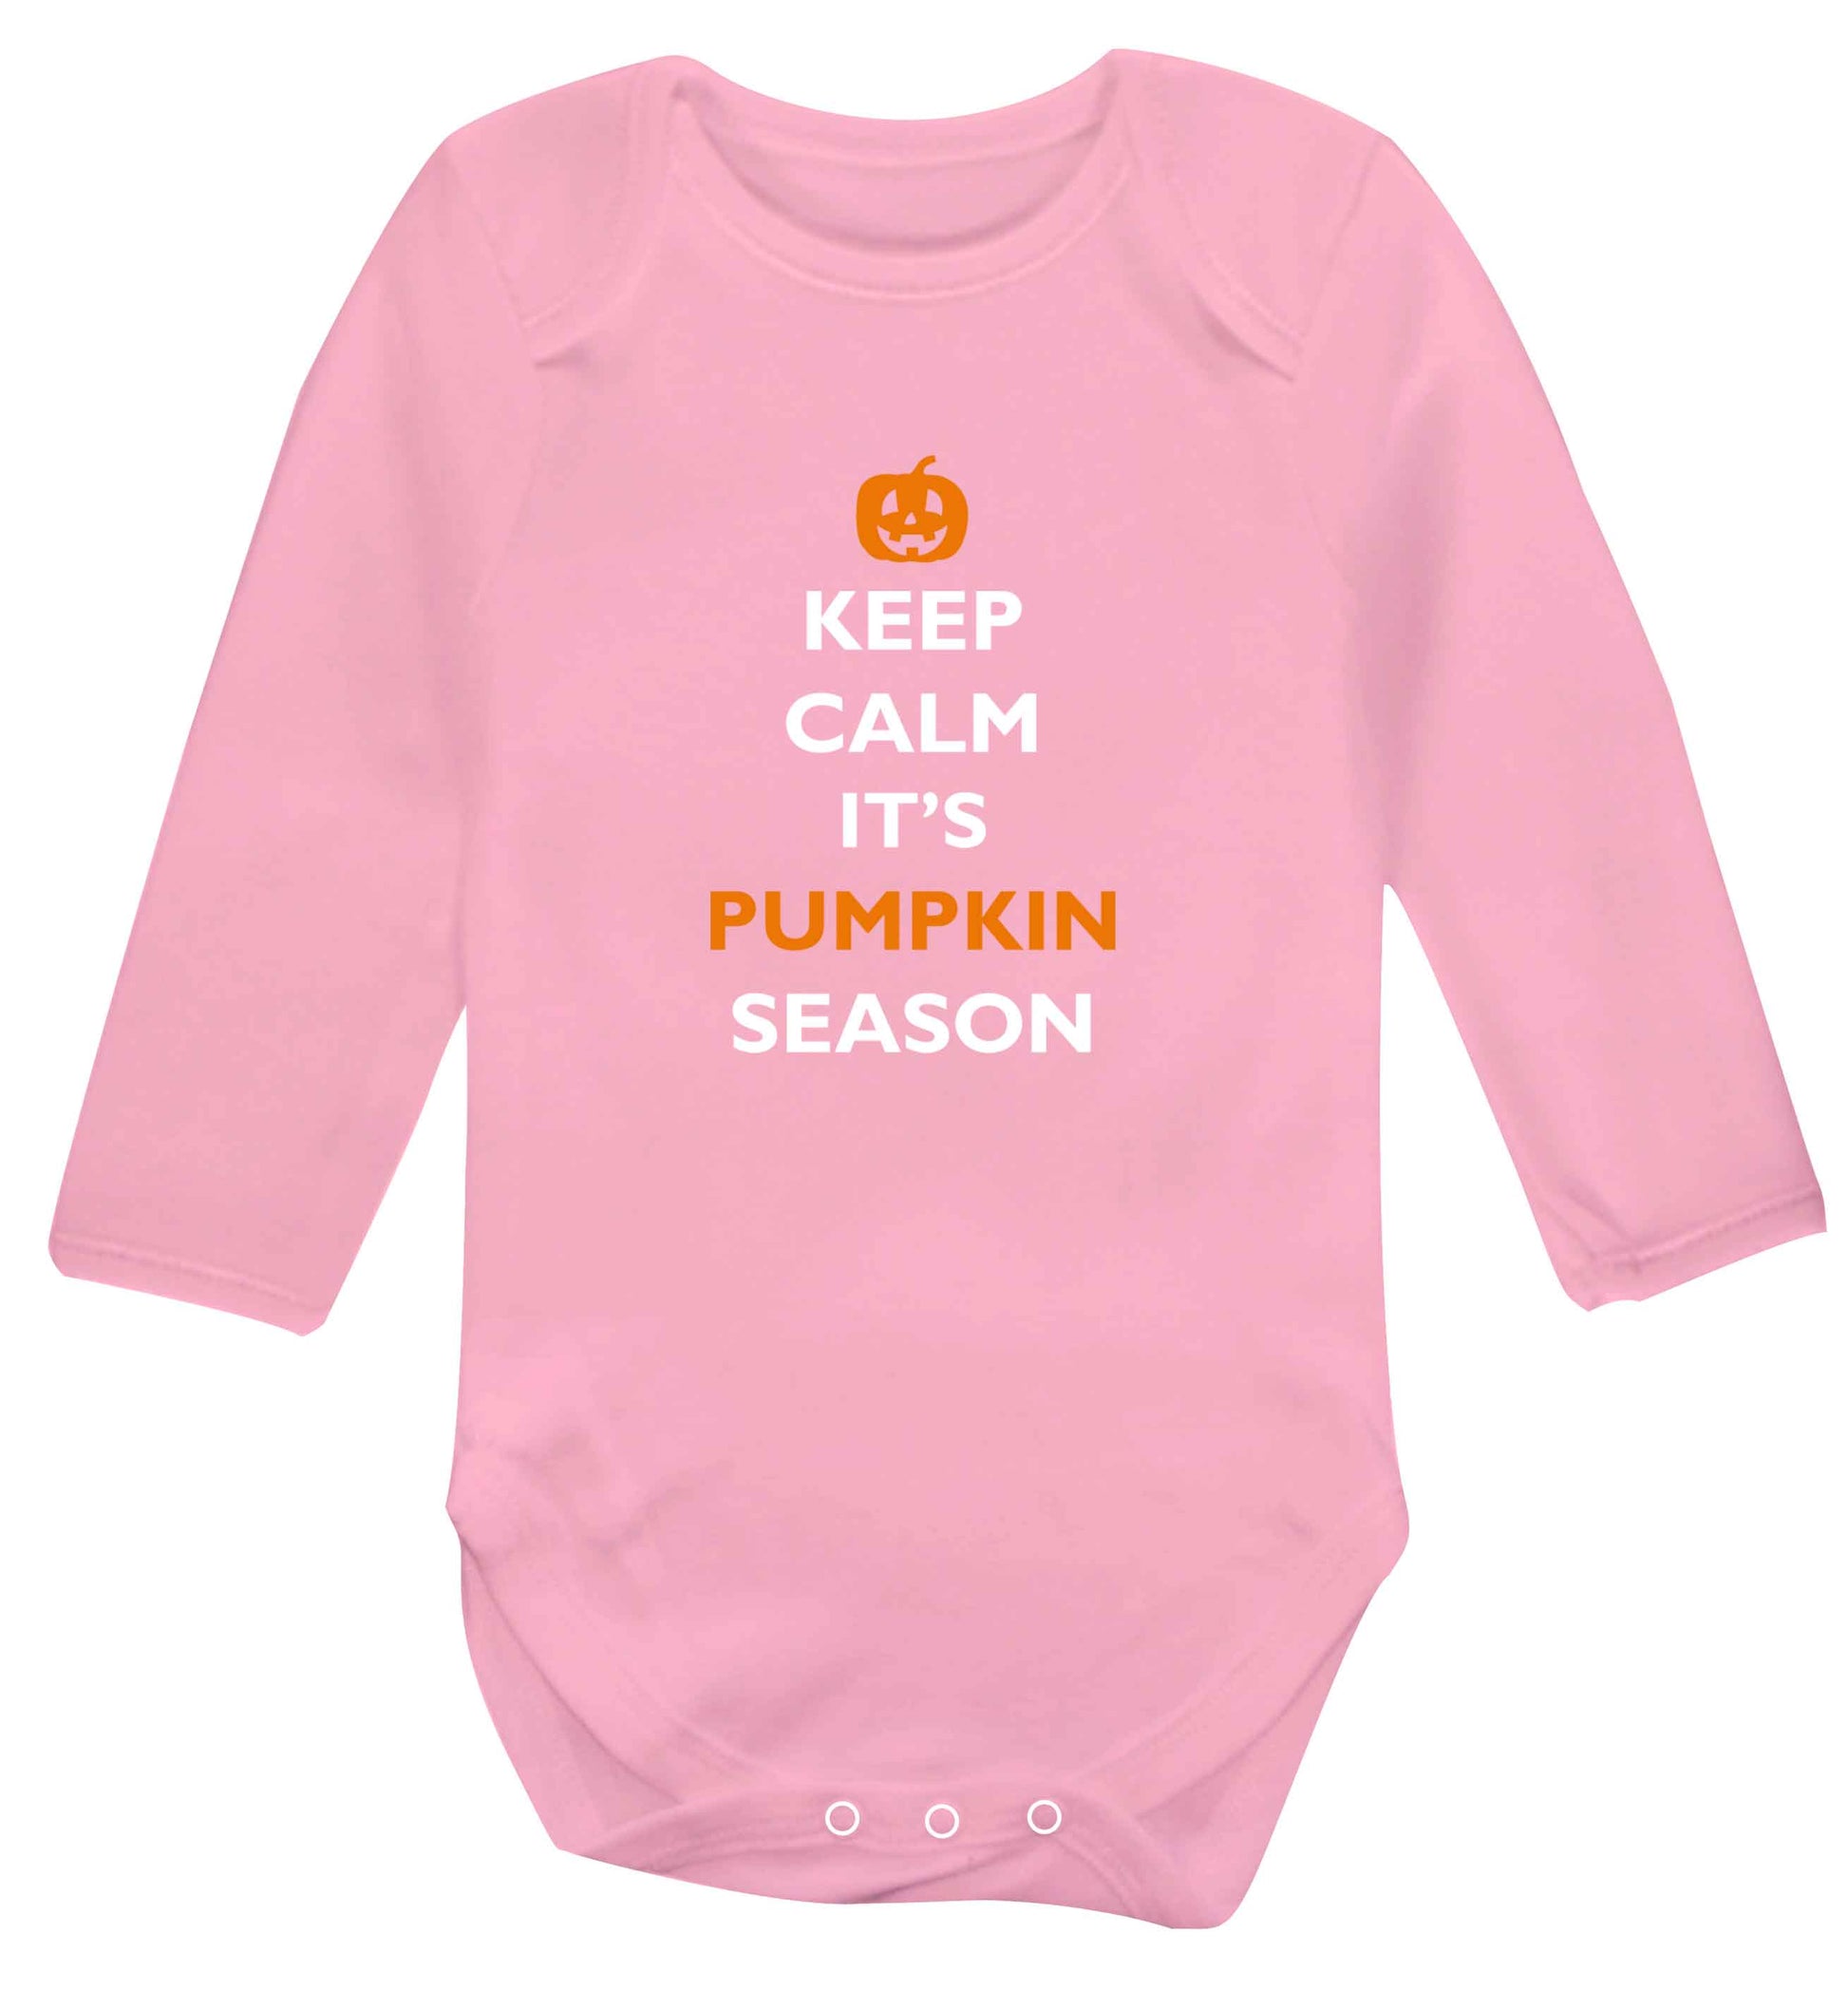 Calm Pumpkin Season baby vest long sleeved pale pink 6-12 months